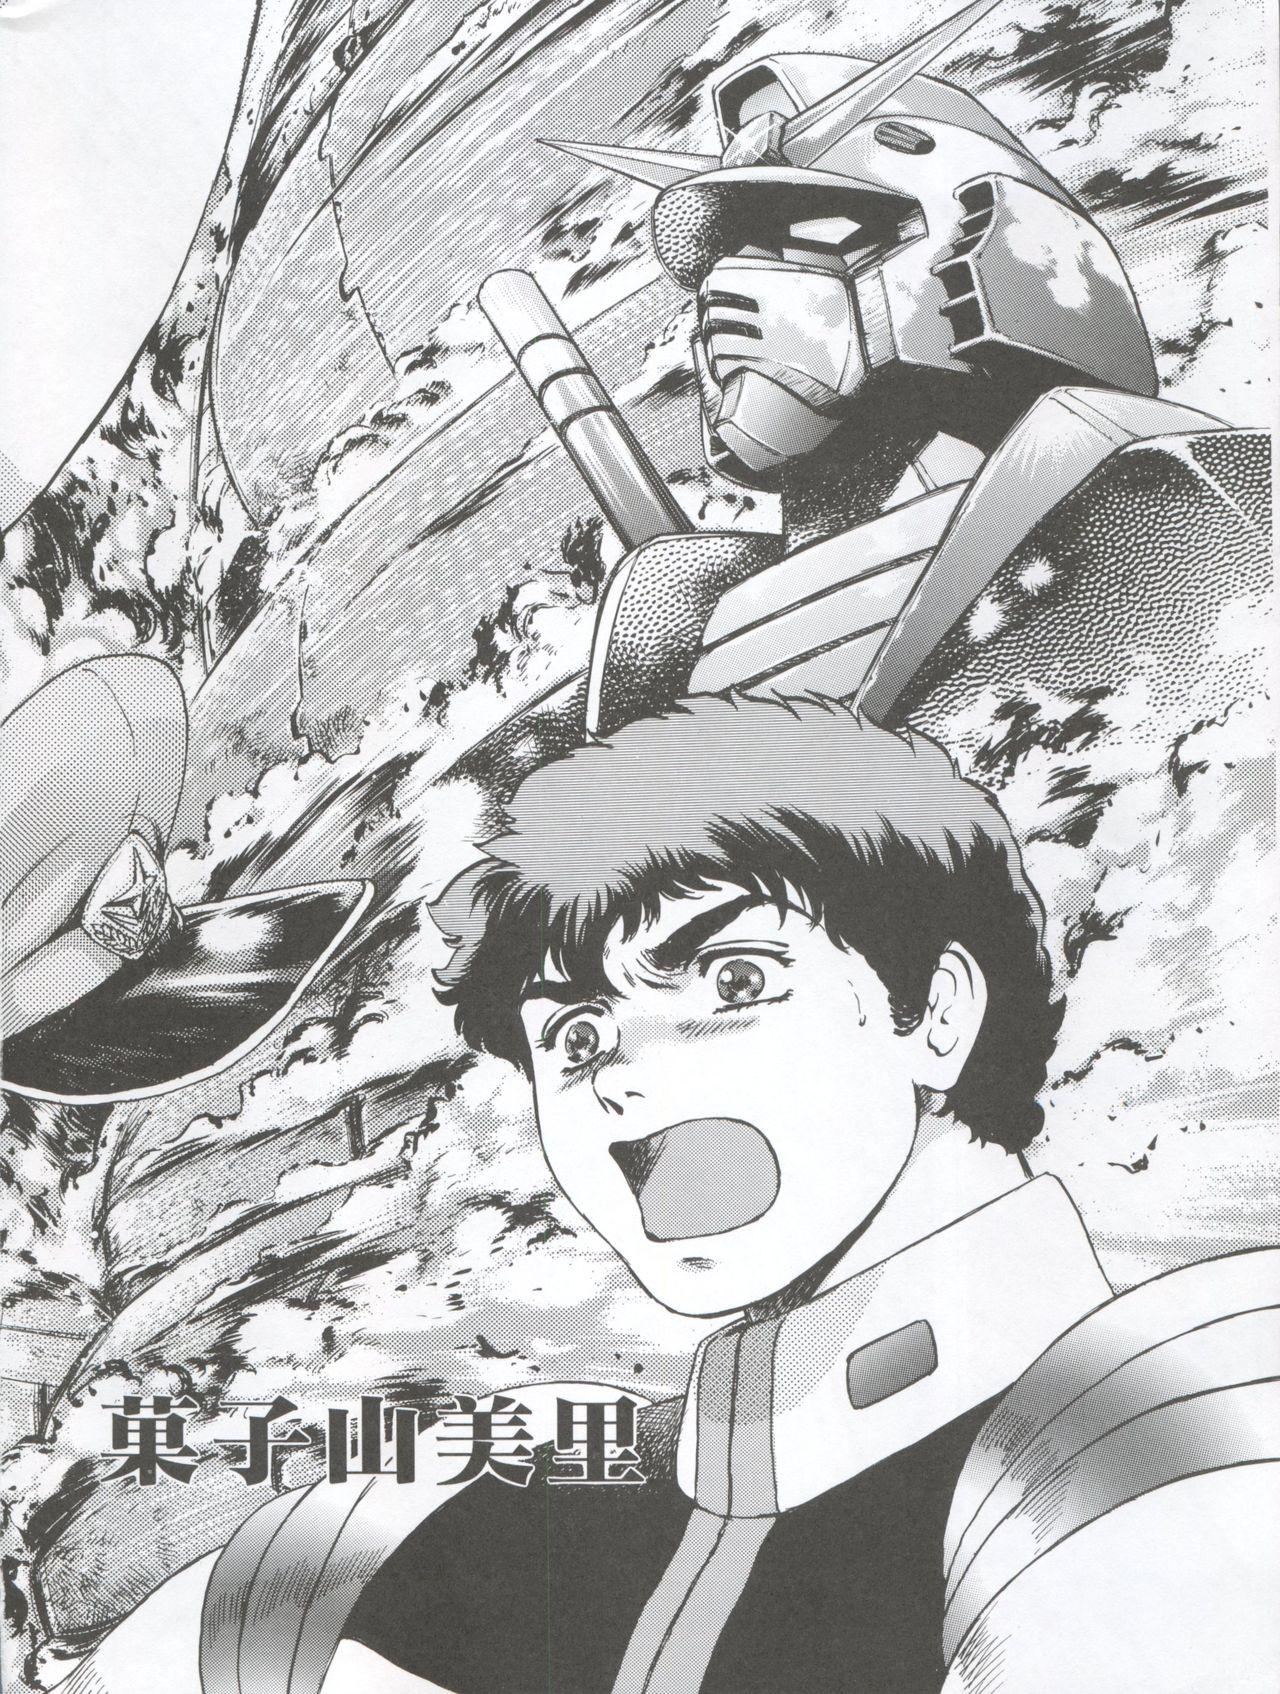 NEXT Climax Magazine 3 Gundam Series 5